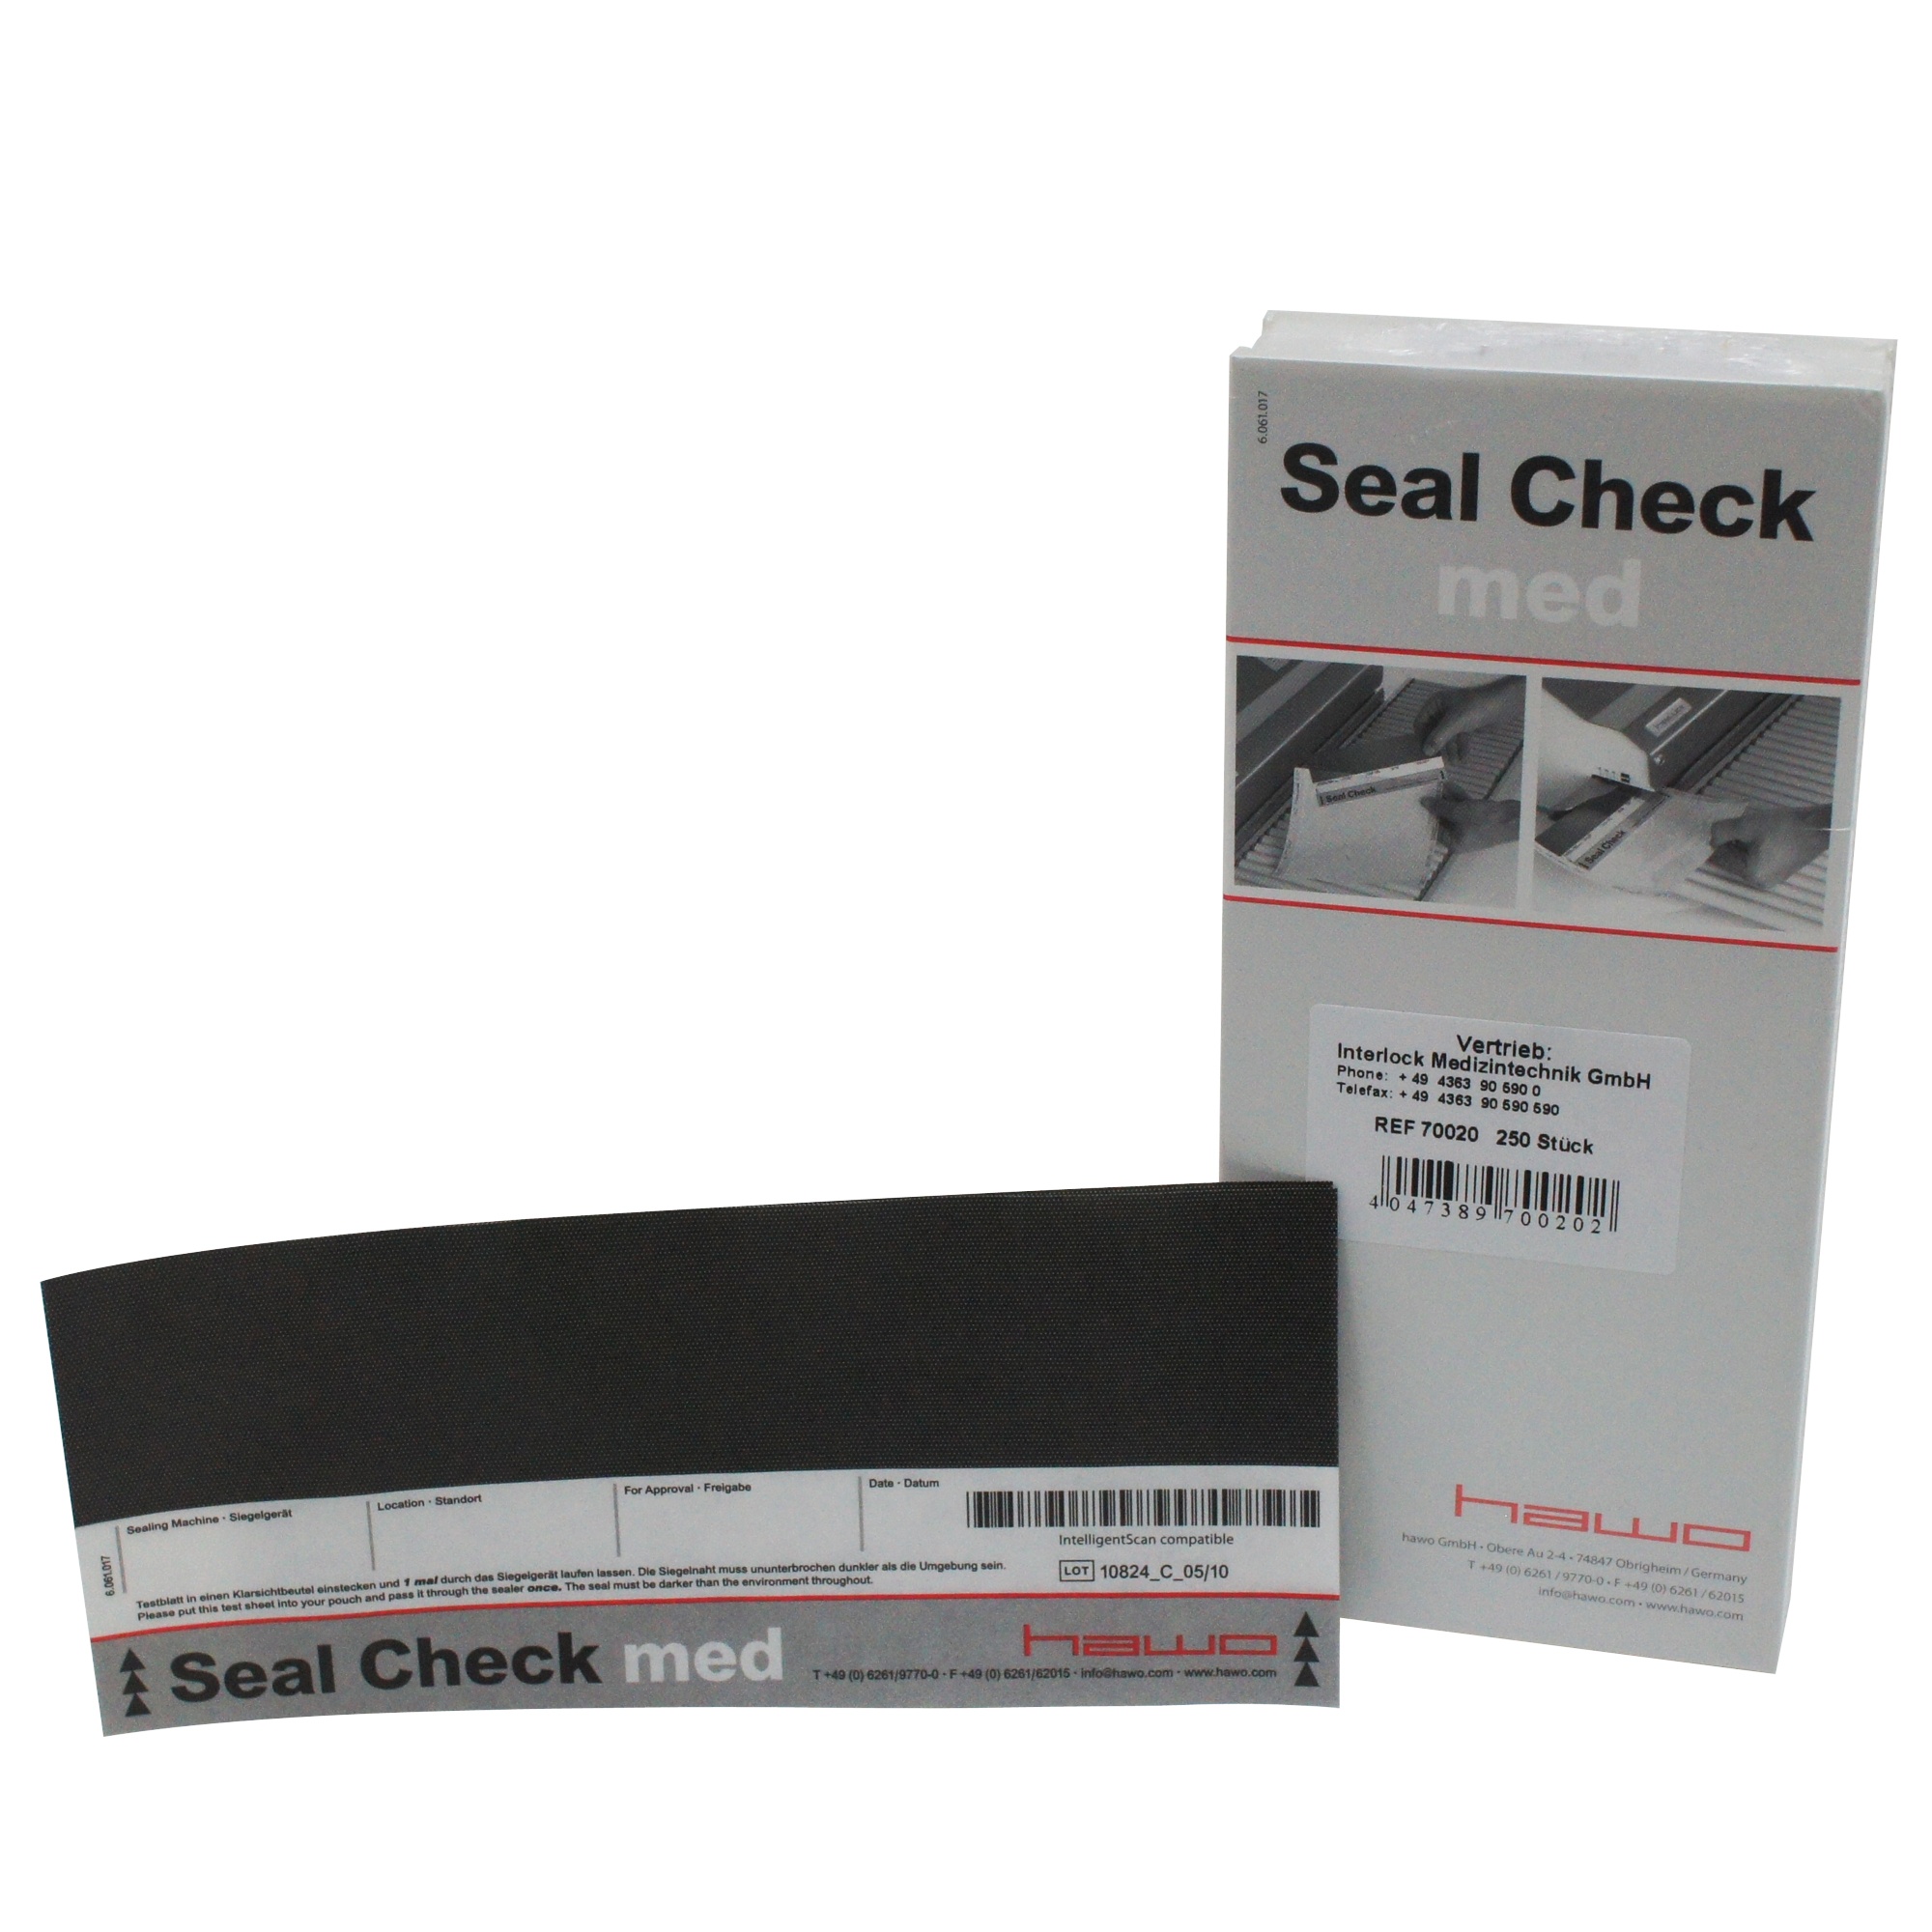 Seal Check med Image